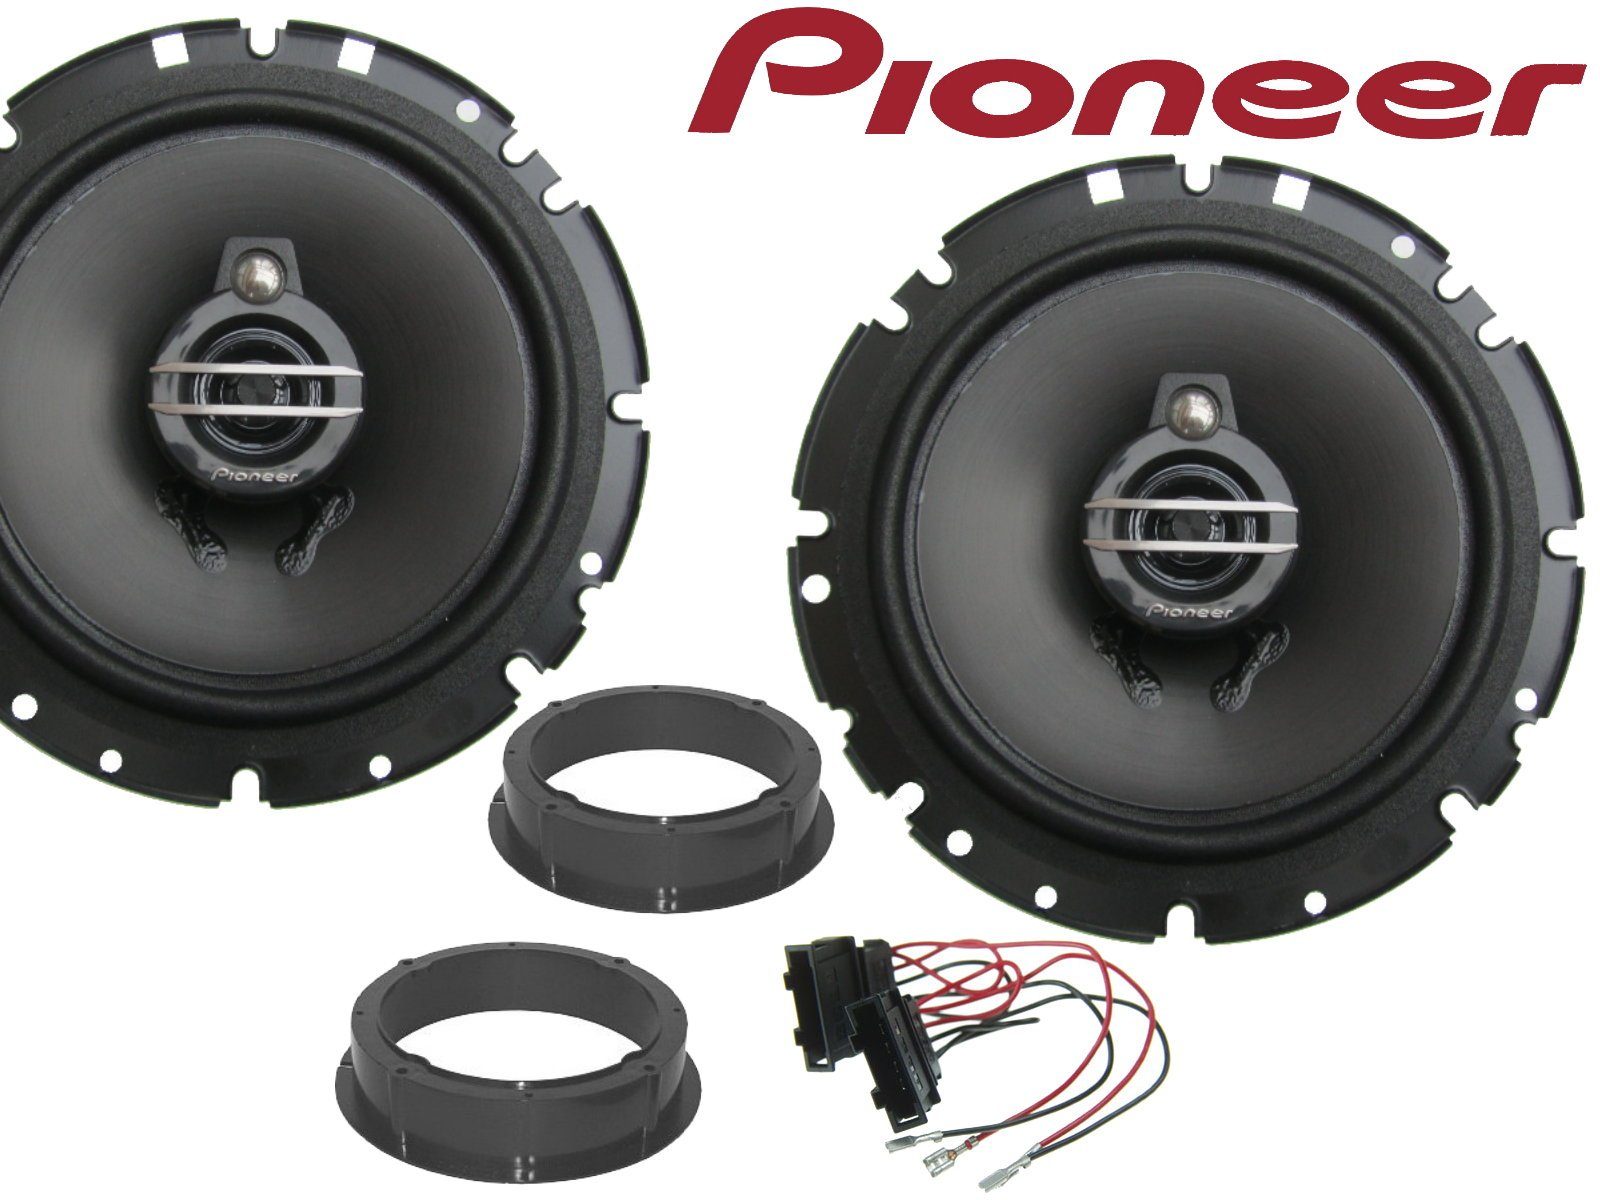 DSX Pioneer 3Wege passend für VW Polo V 6R Bj 09-17 La Auto-Lautsprecher (40 W)